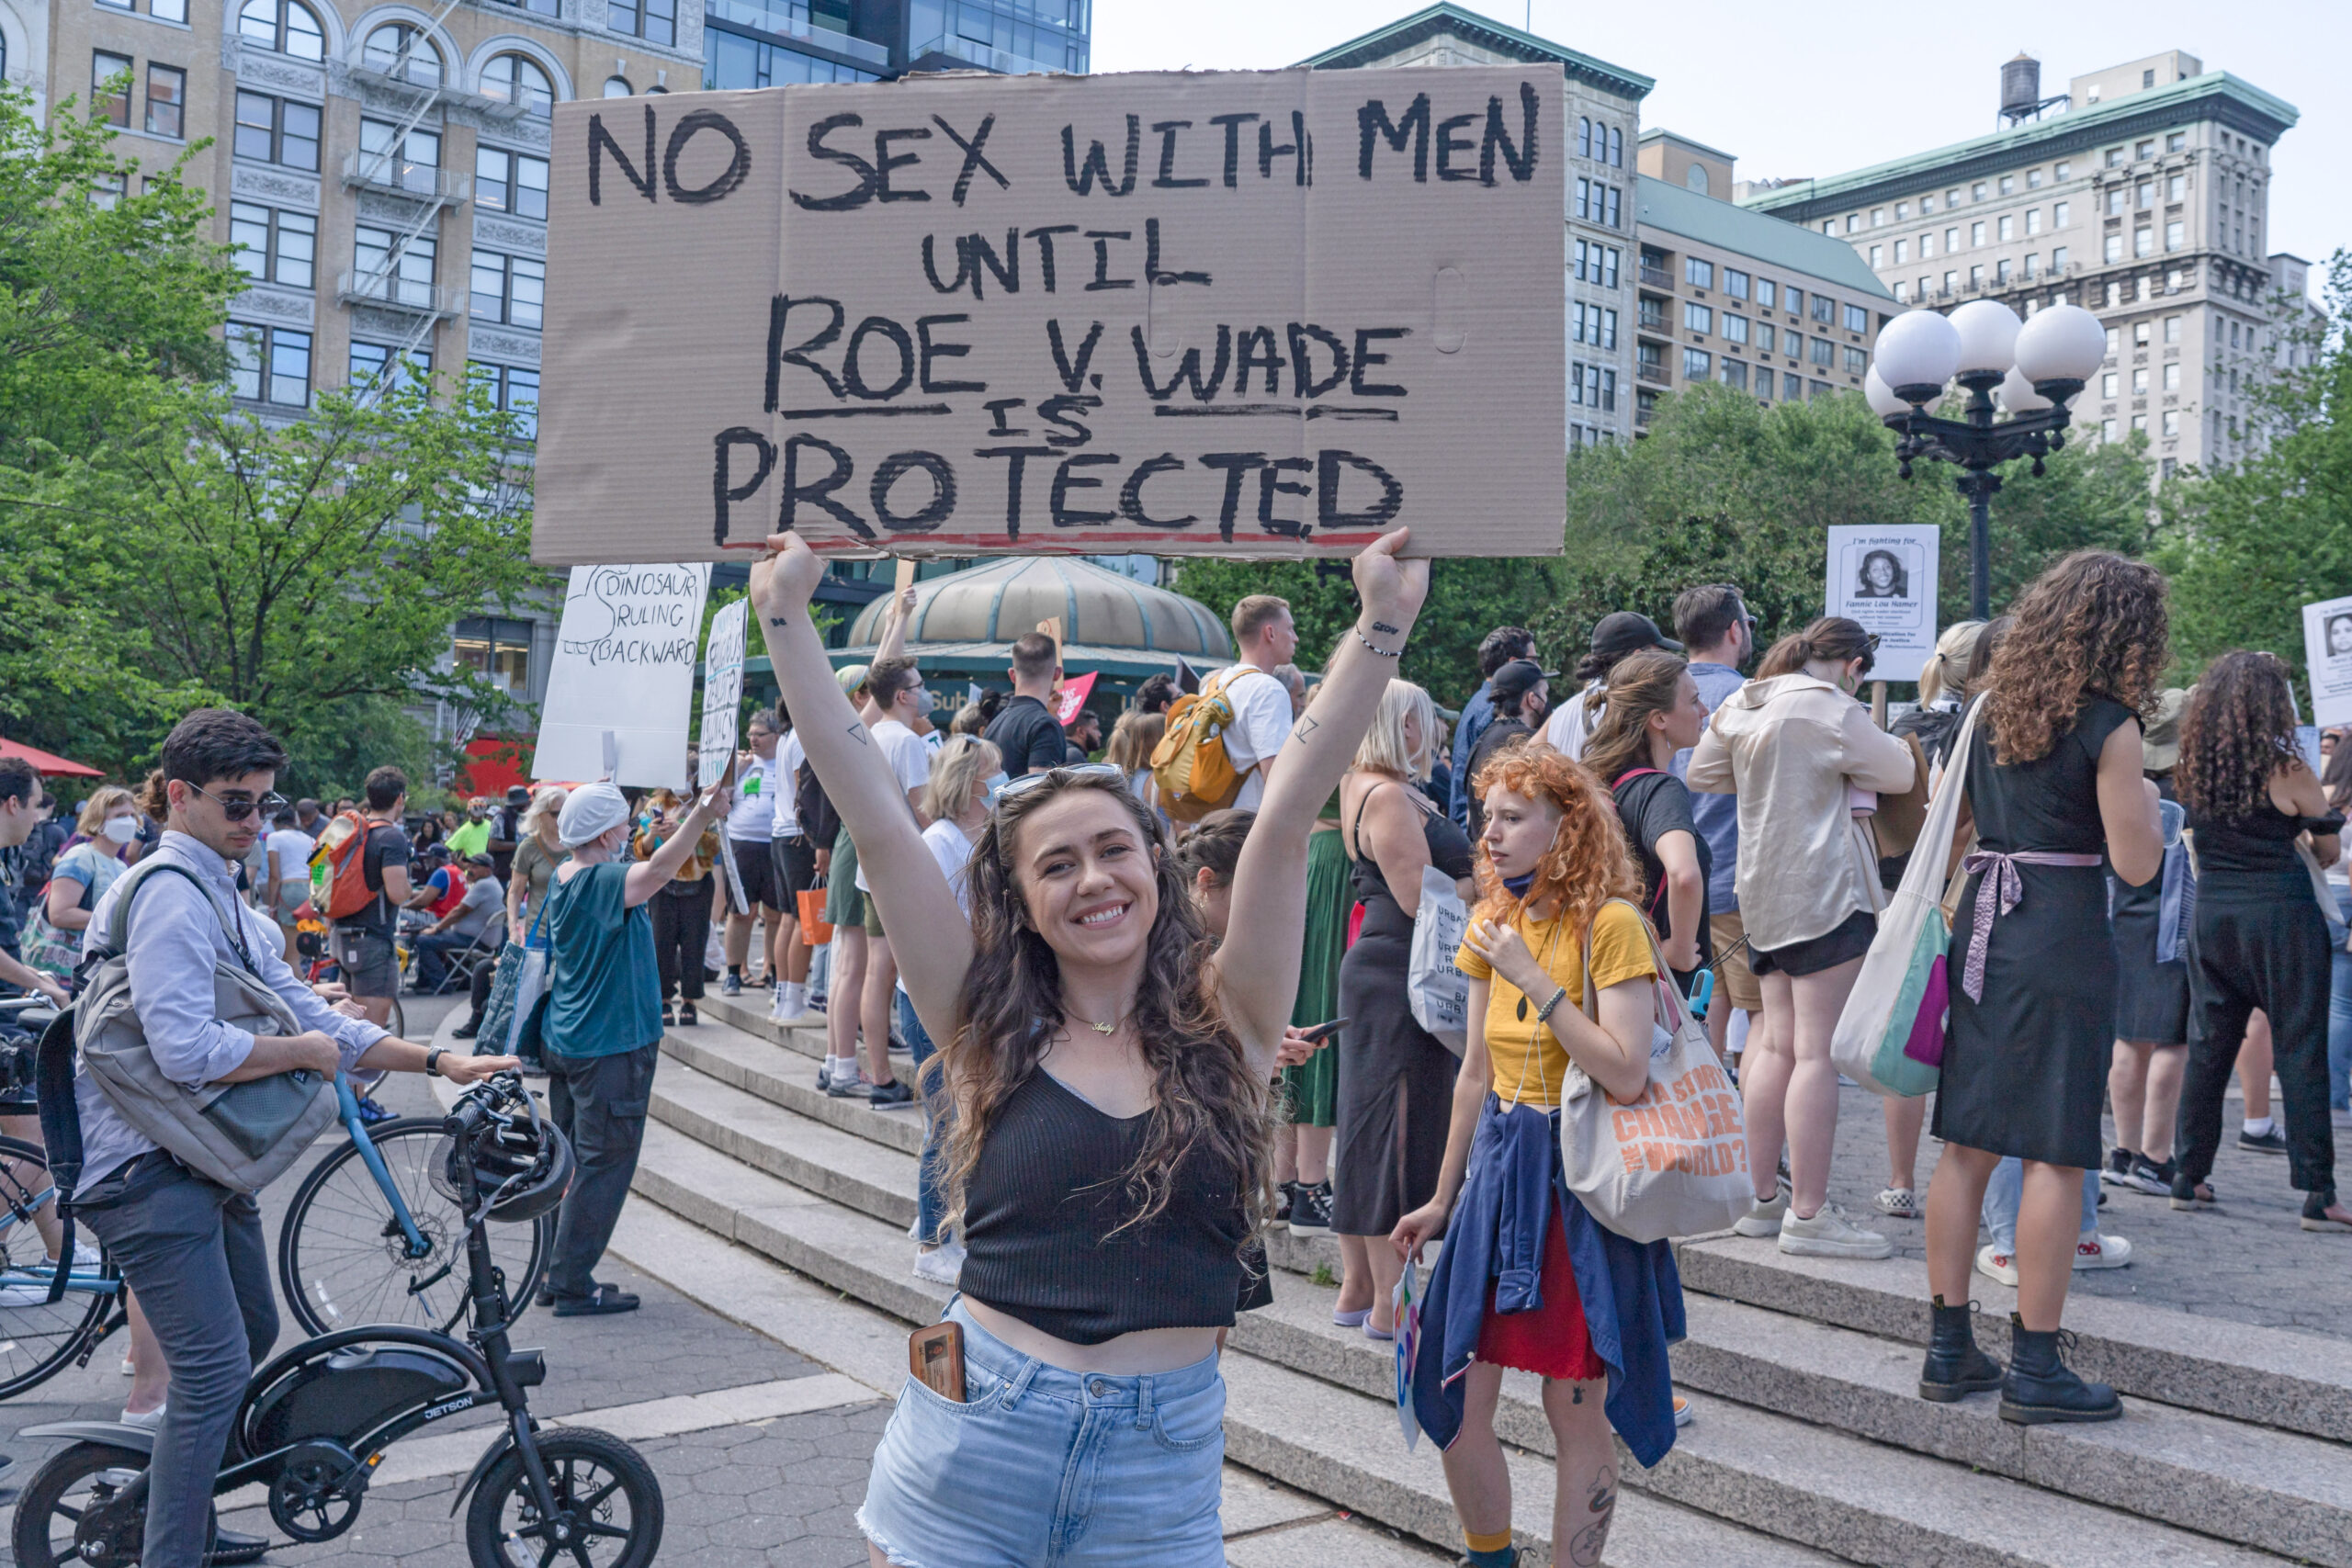 Надпись на плакате: «Никакого секса с мужчинами до тех пор, пока дело Роу против Уэйда не будет защищено». Акция протеста на Юнион-сквер в Нью-Йорке, США. 24 июня 2022 года. Фото Ron Adar/SOPA Images via ZUMA Press Wire/Scanpix/LETA